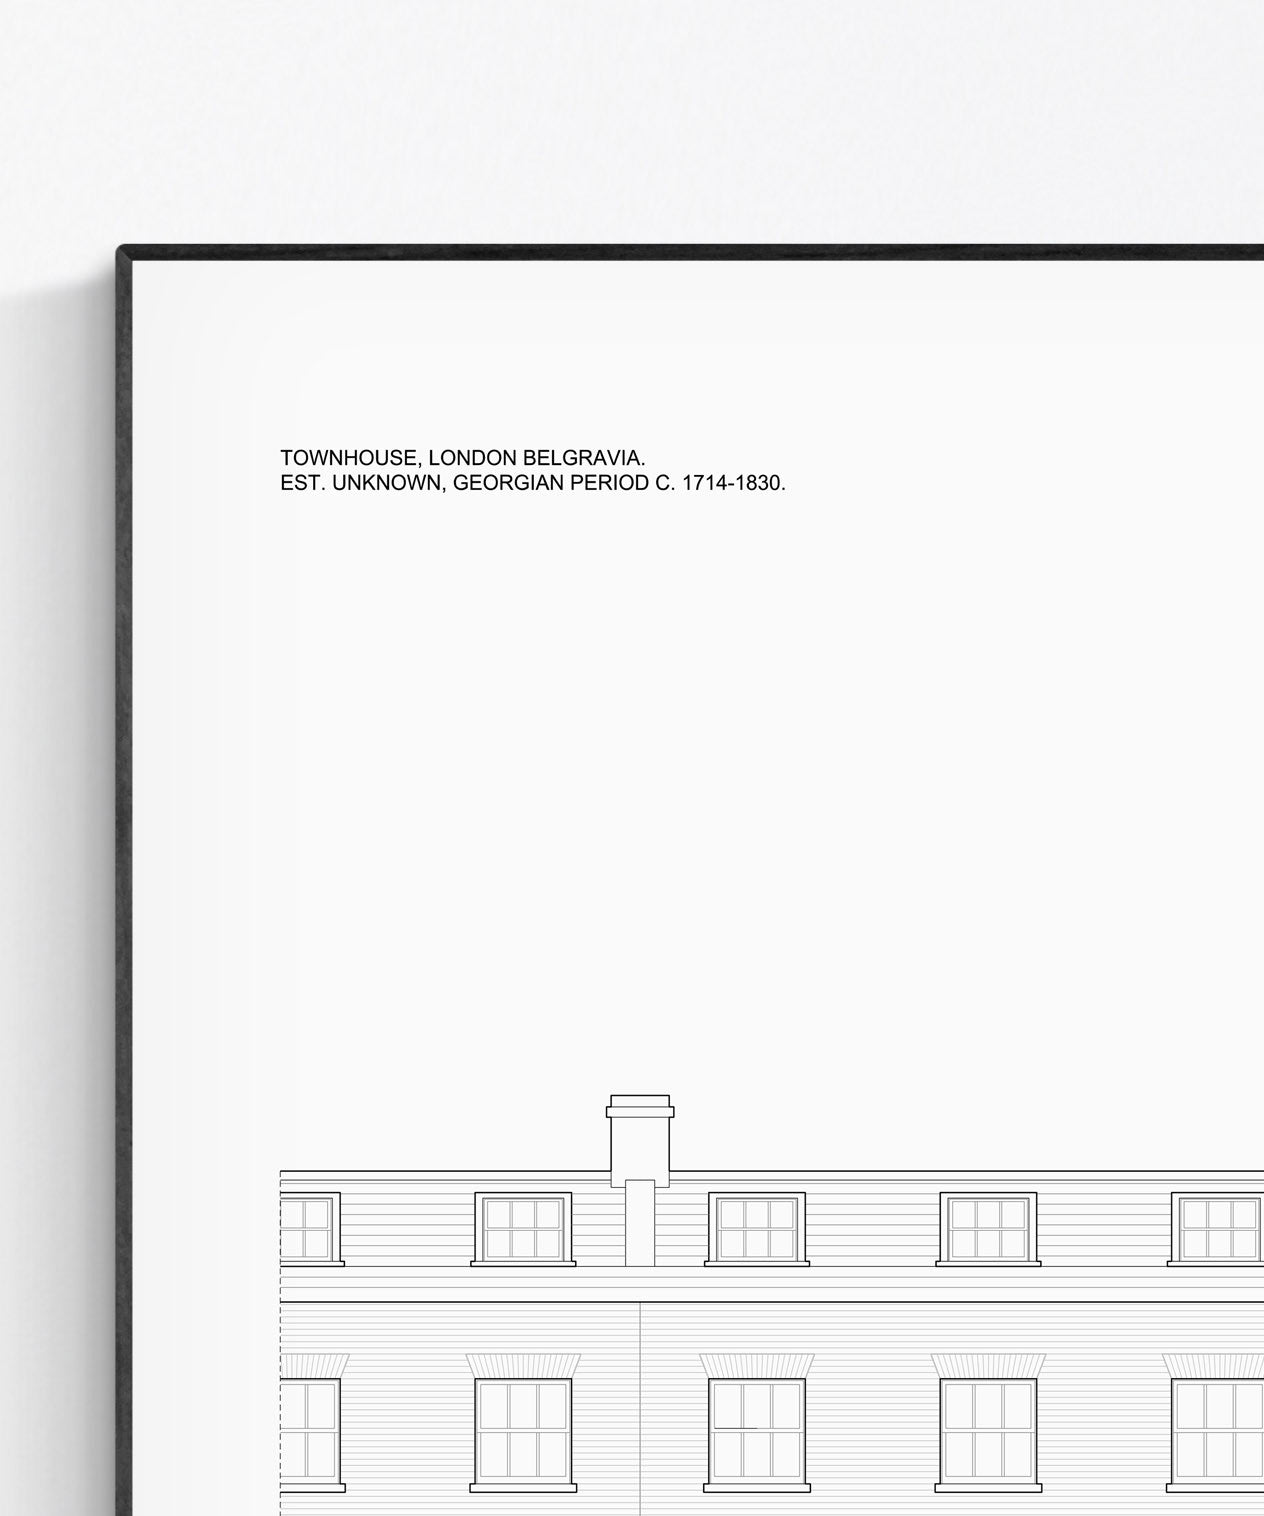 London Townhouse Architectural Print - Detail